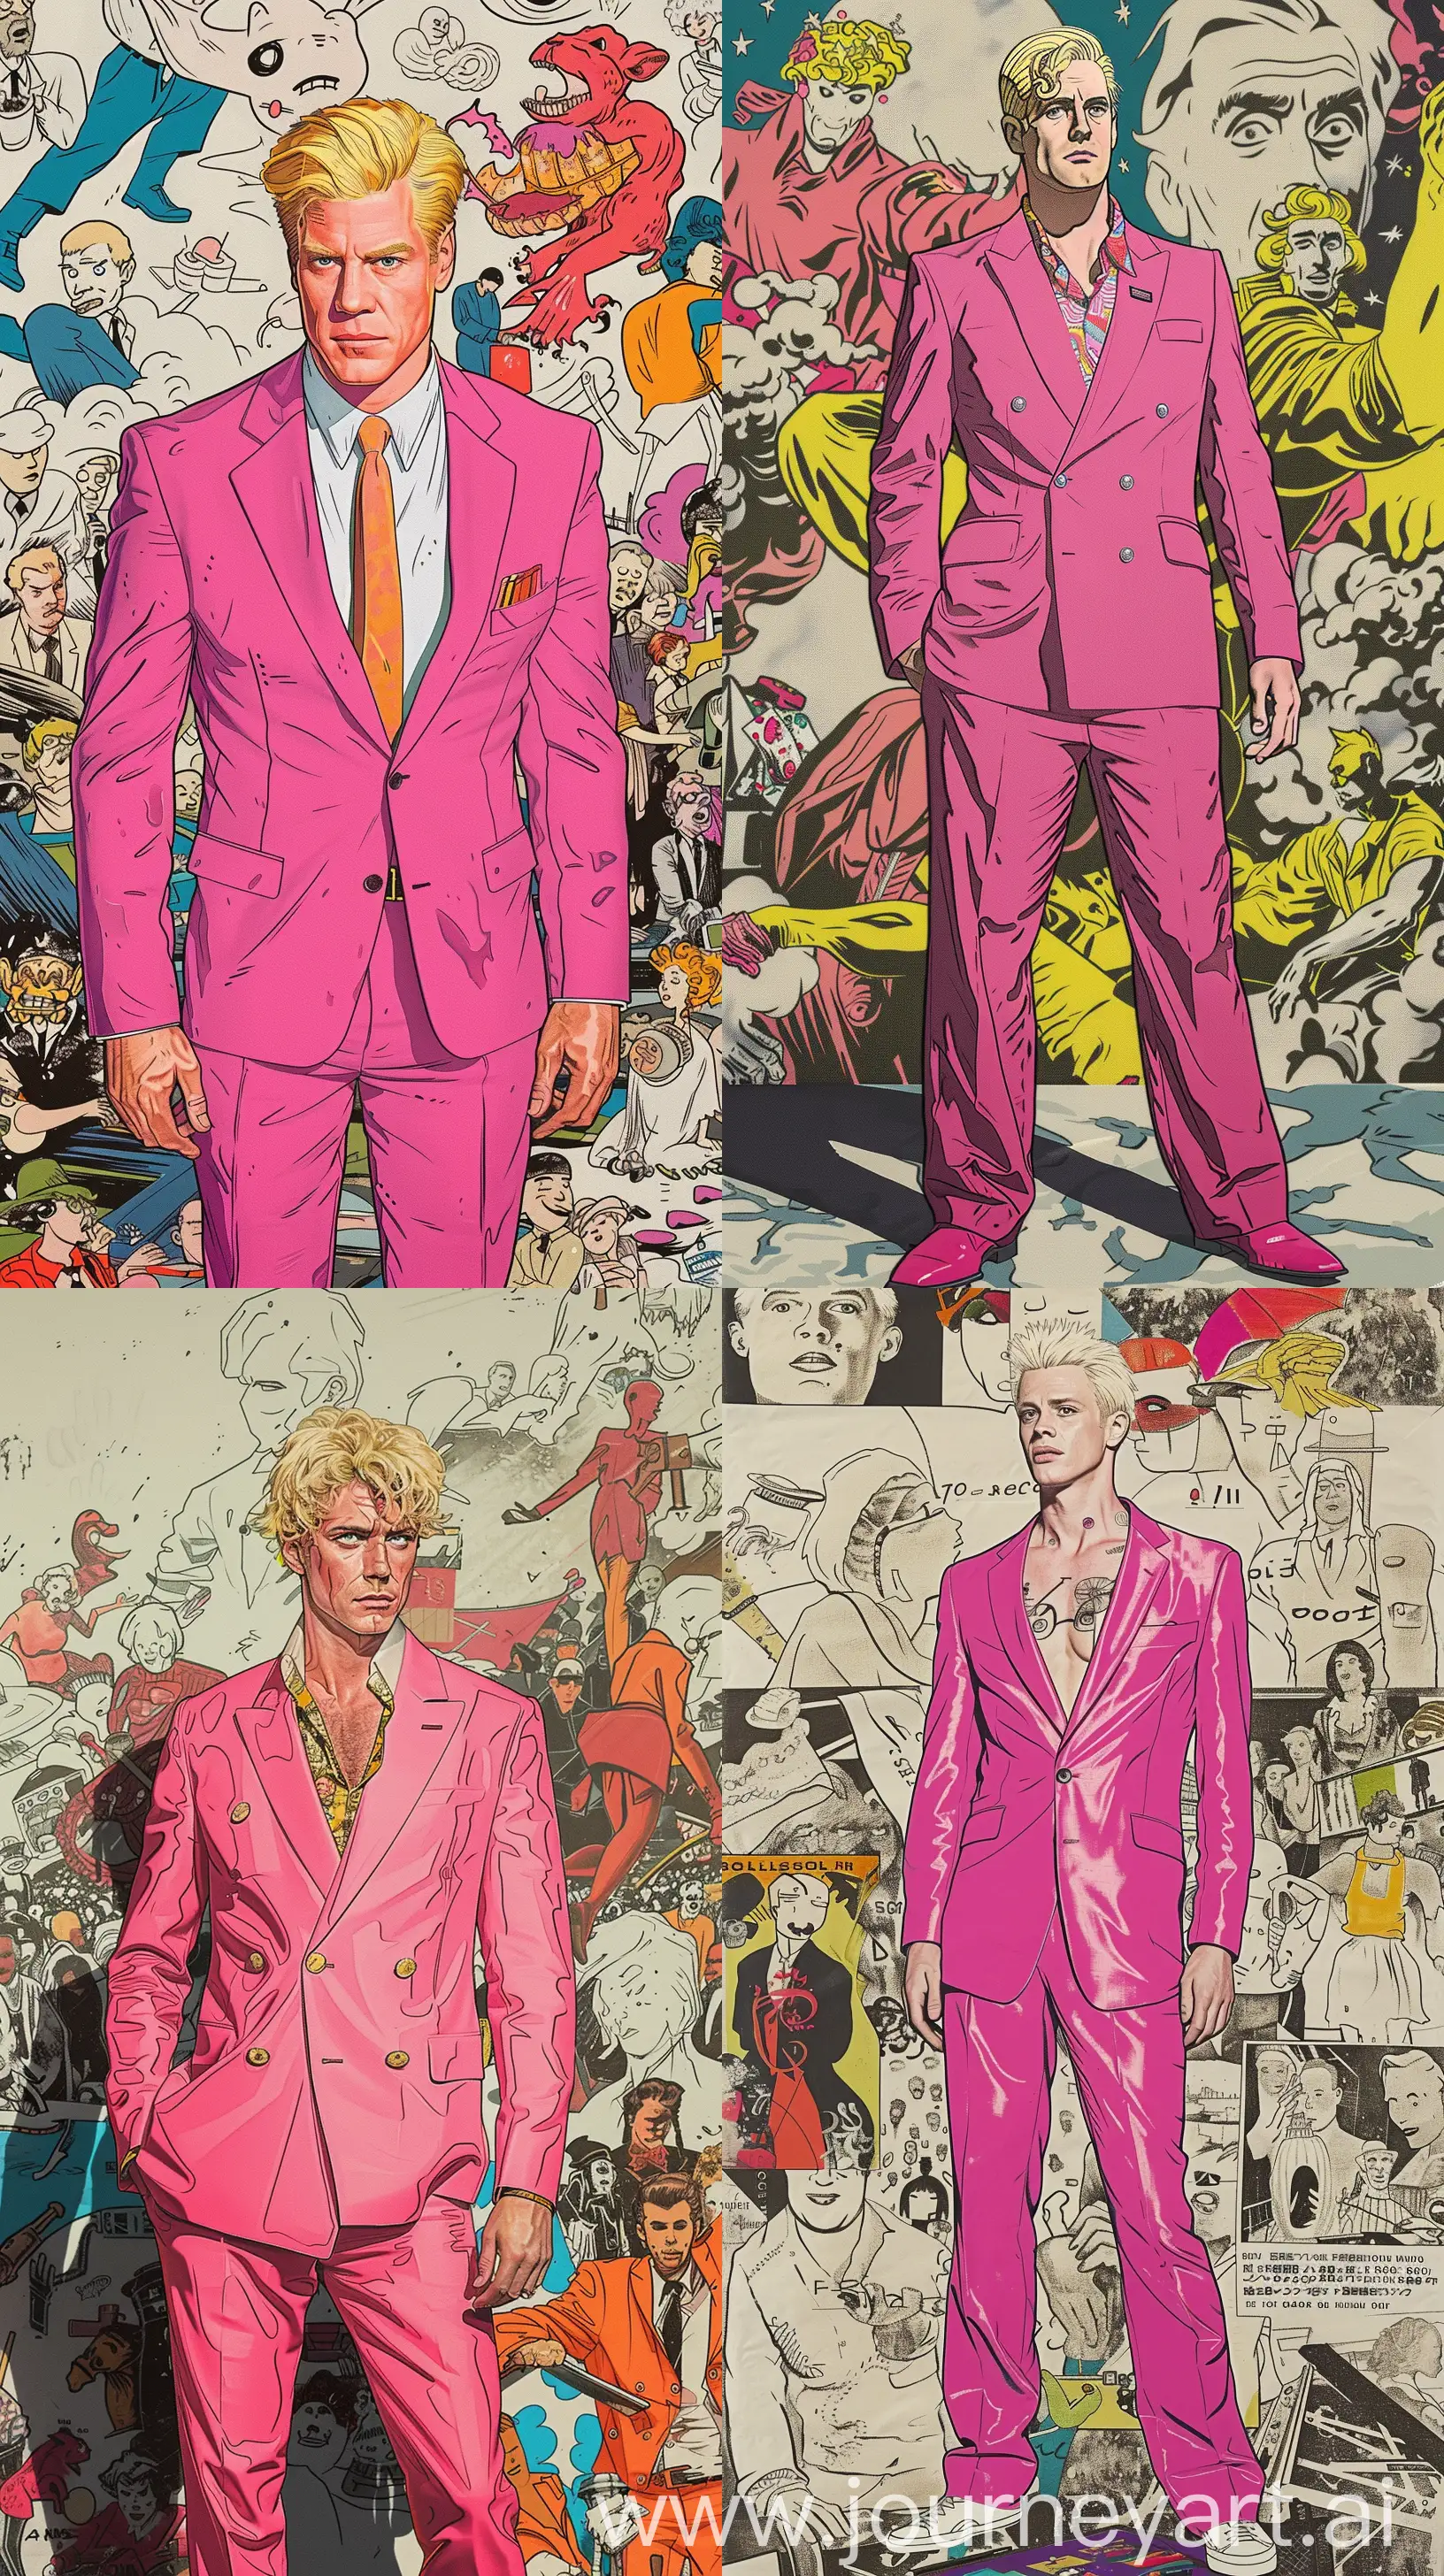 Confident-50YearOld-in-Vibrant-Pink-Suit-Colescottinspired-Satirical-Art